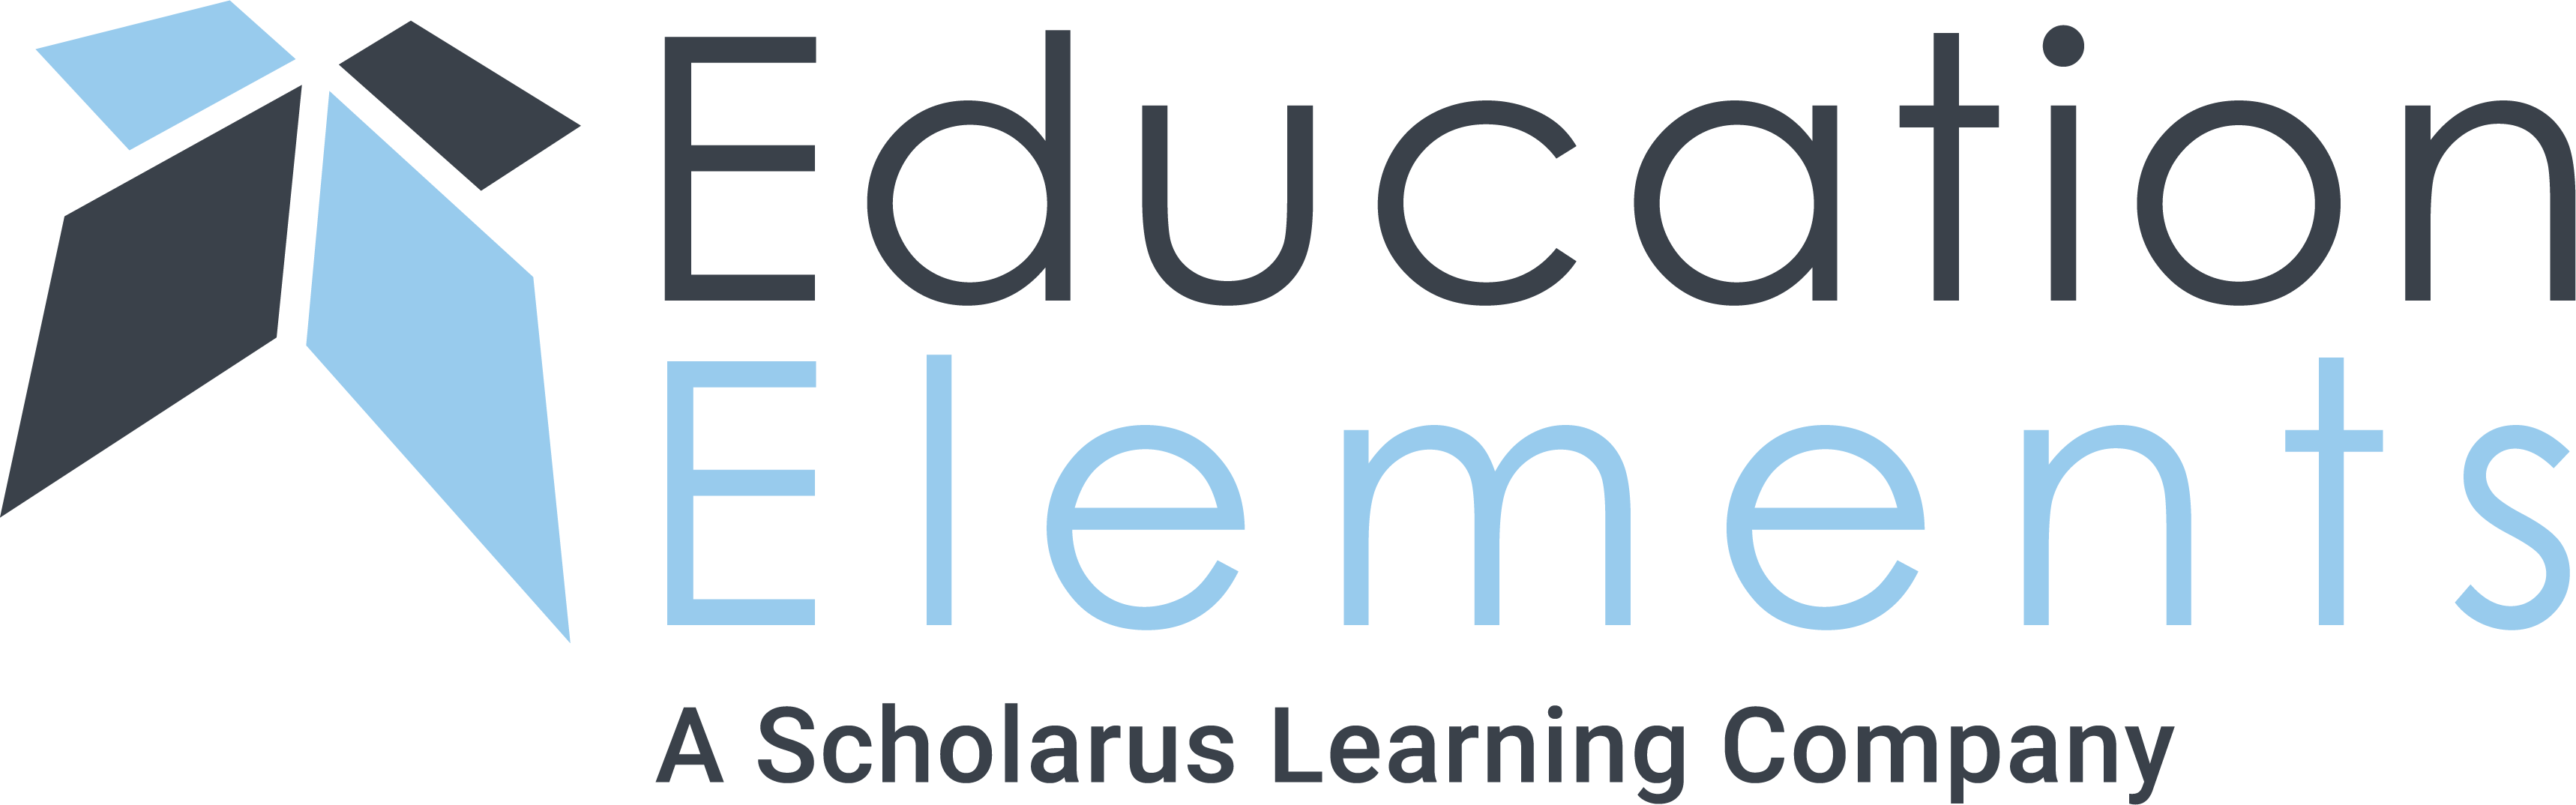 EE logo scholarus tagline